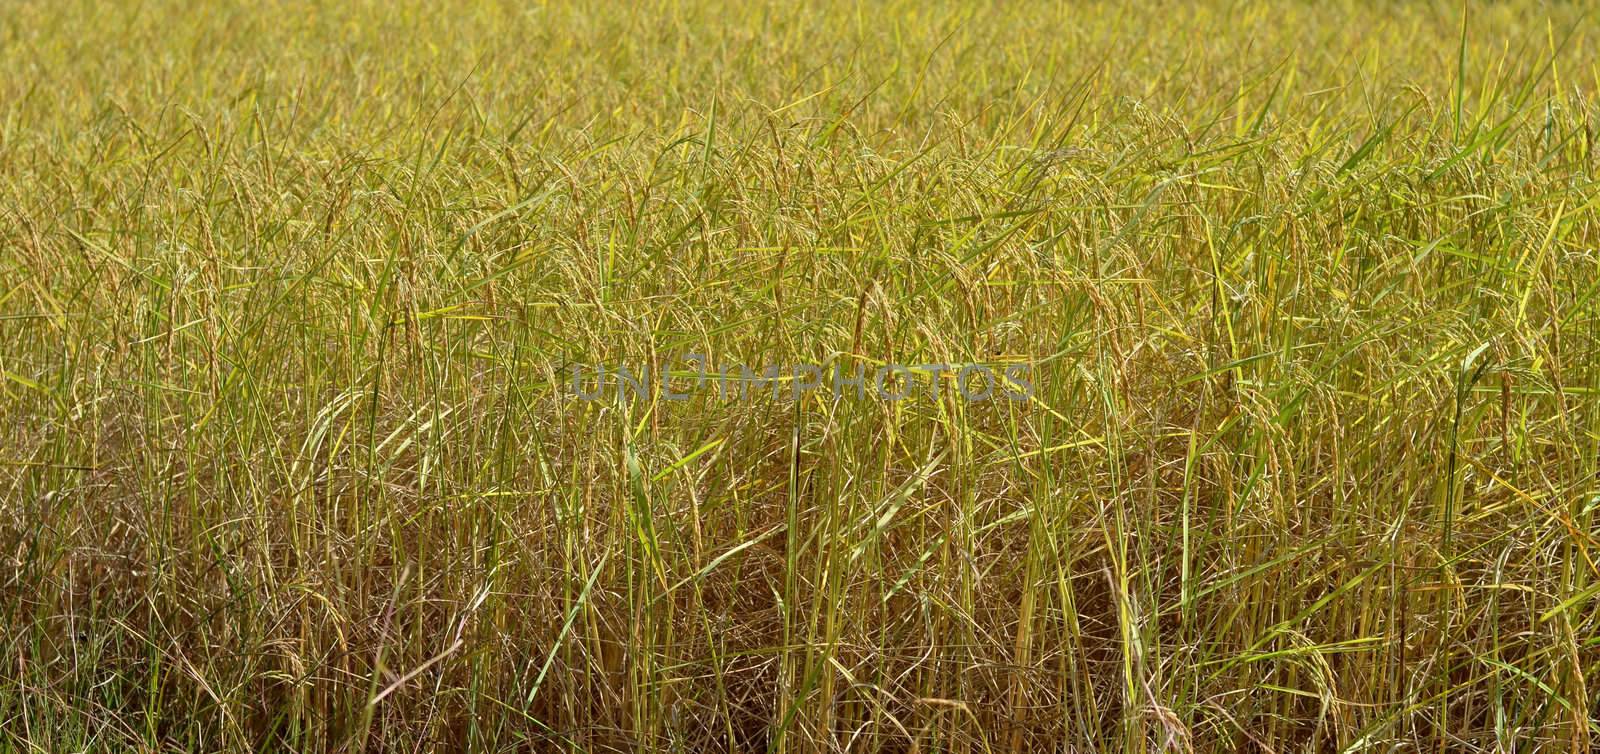 Autumn rice field by rakratchada